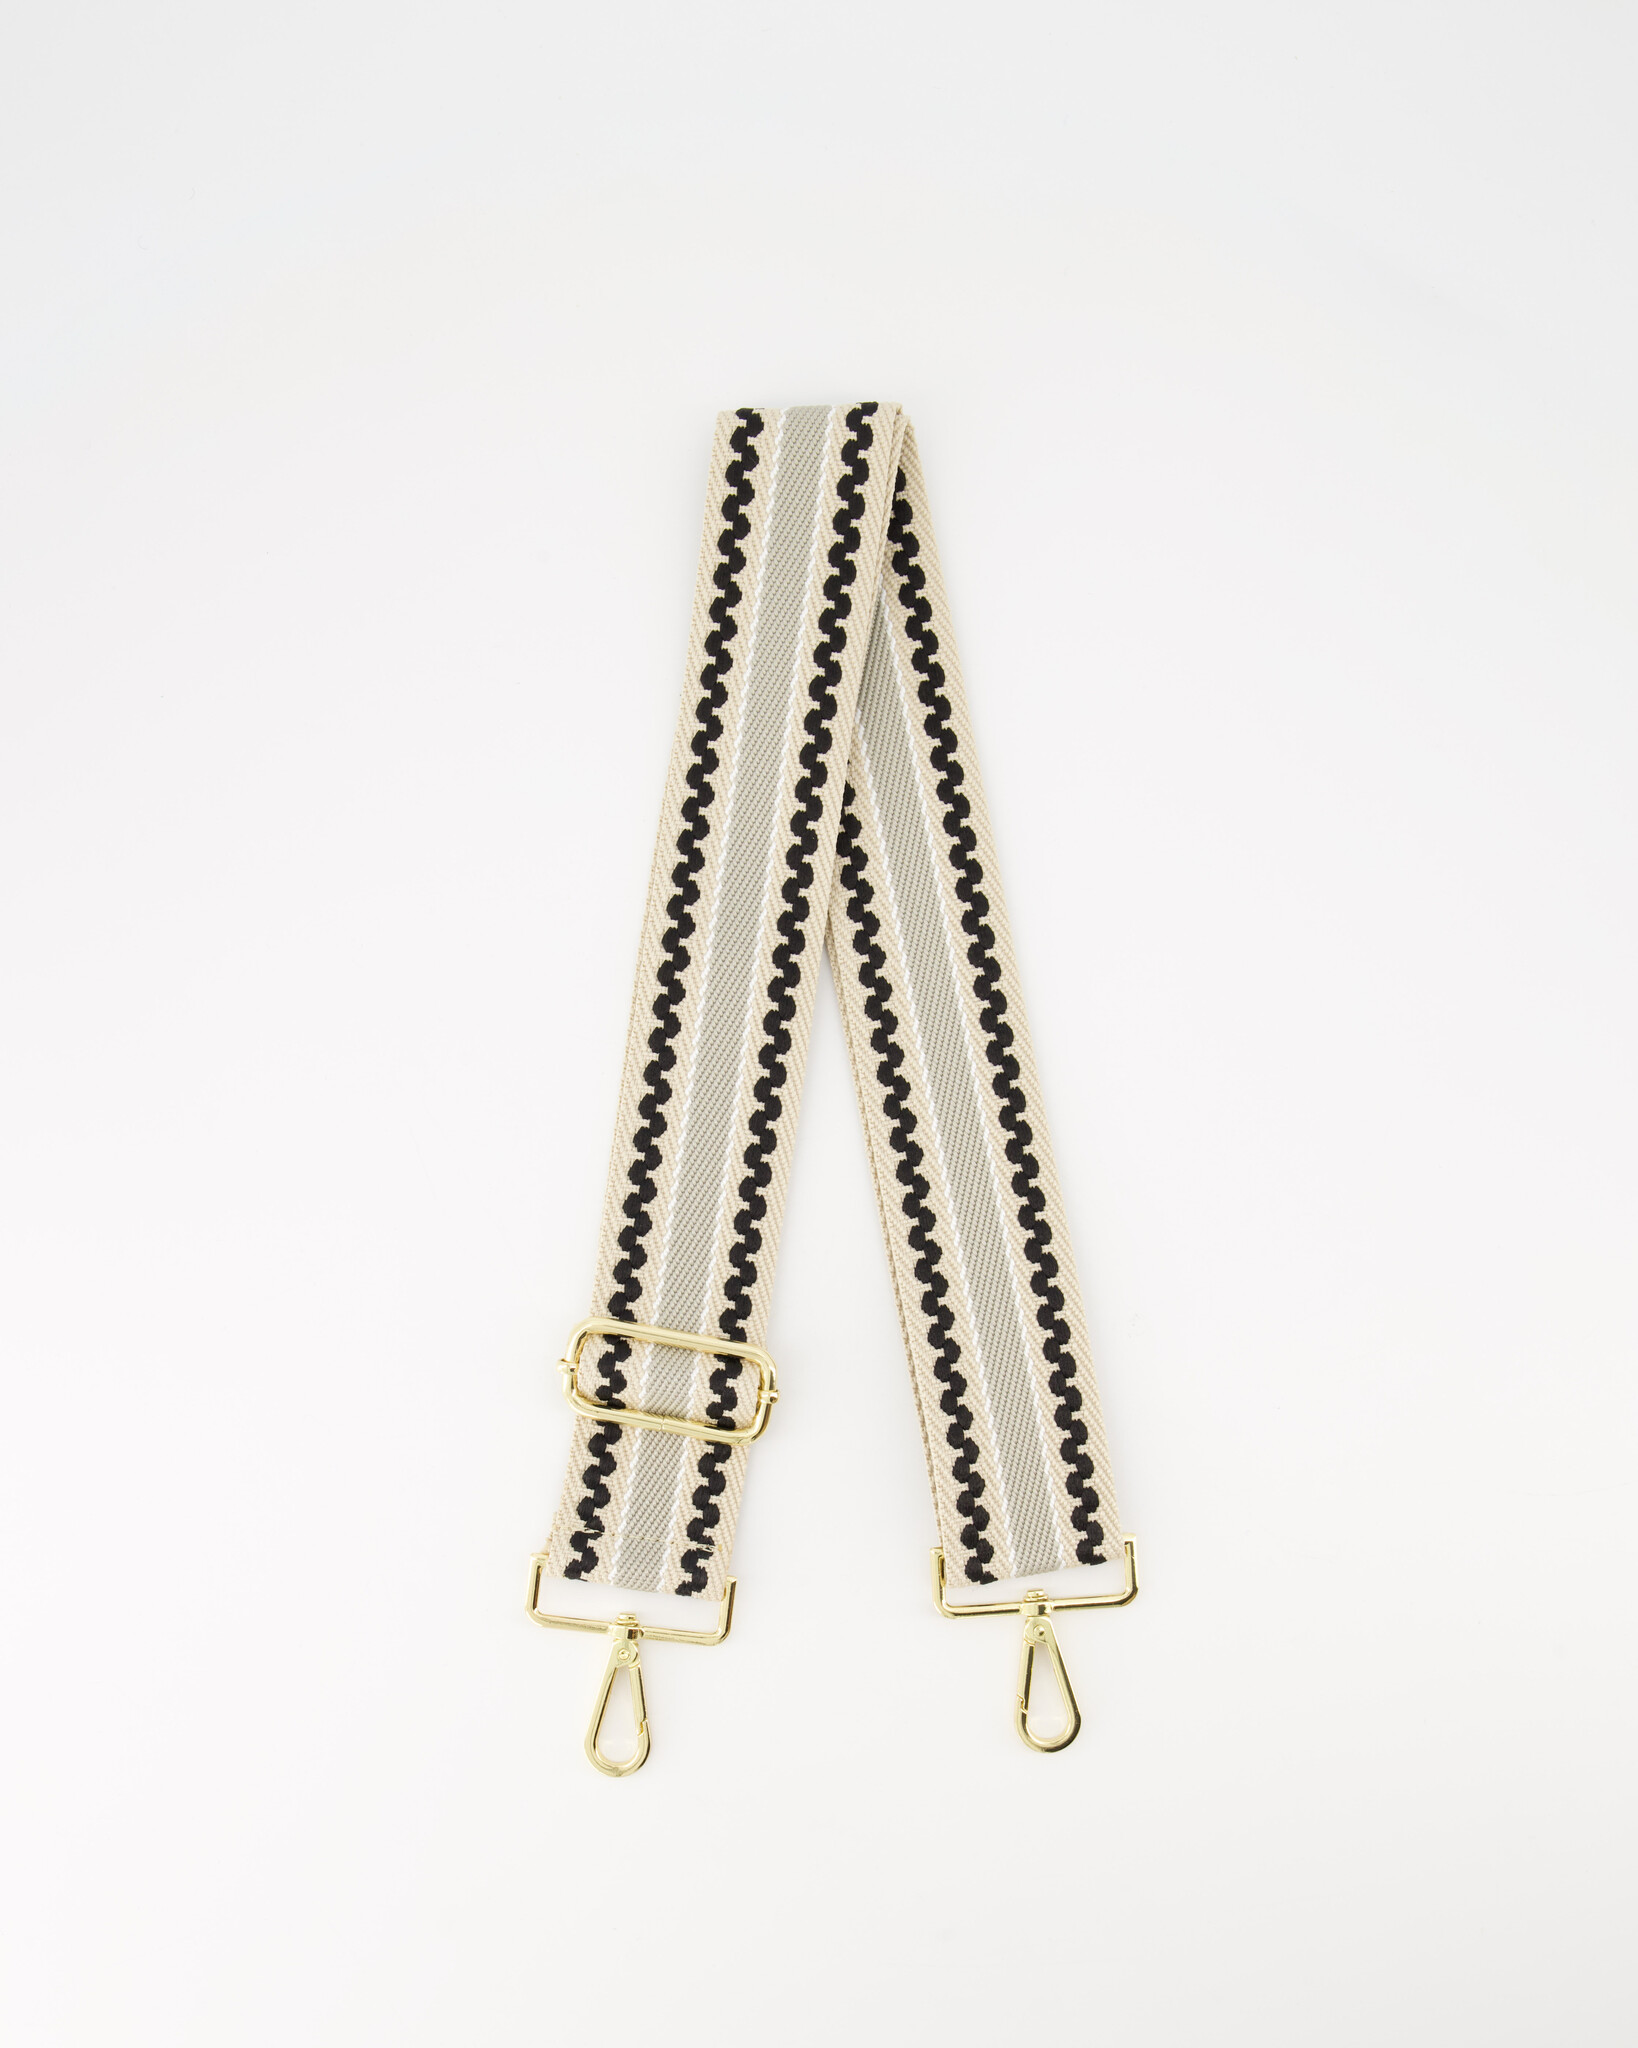 Bag straps | Roxanne - - Bag straps - Beige - - Gold | Teatro Fashion